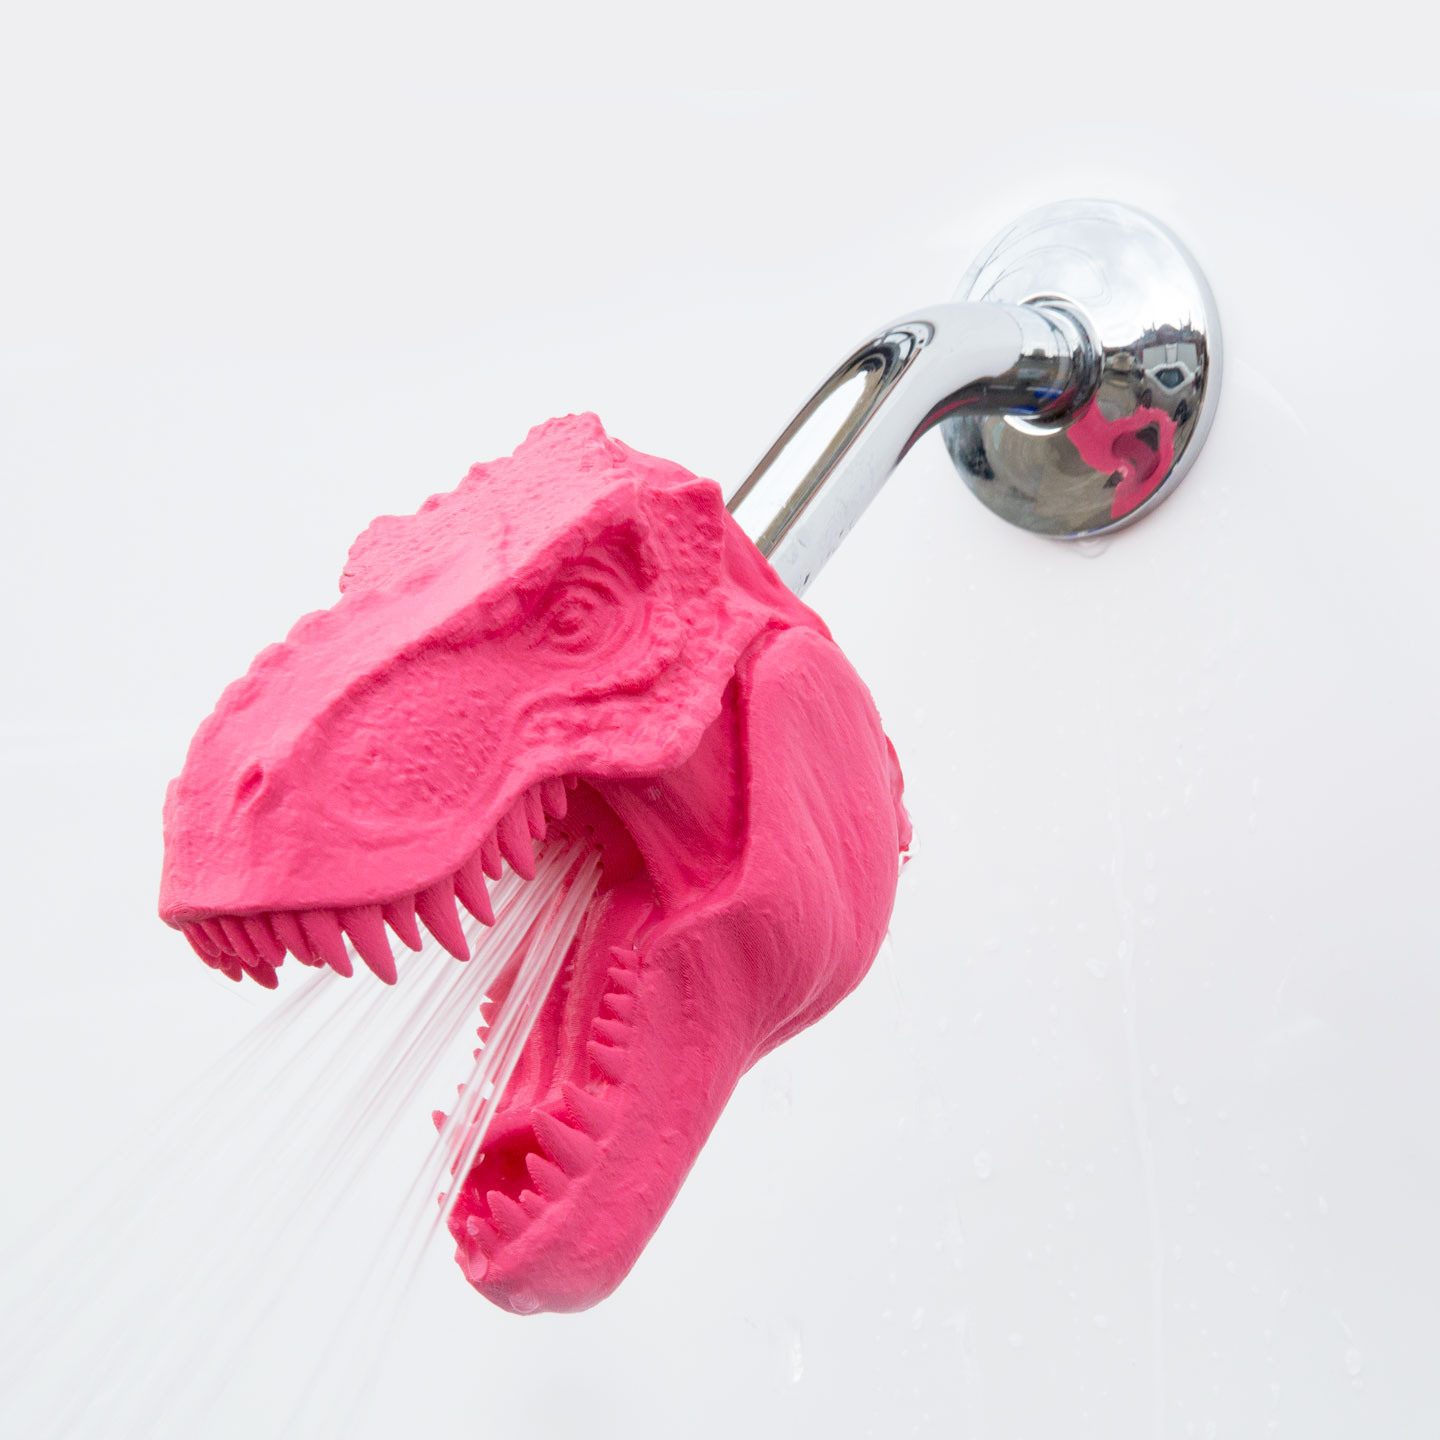 zooheads-makes-3d-printed-animal-showerheads-digital-trends